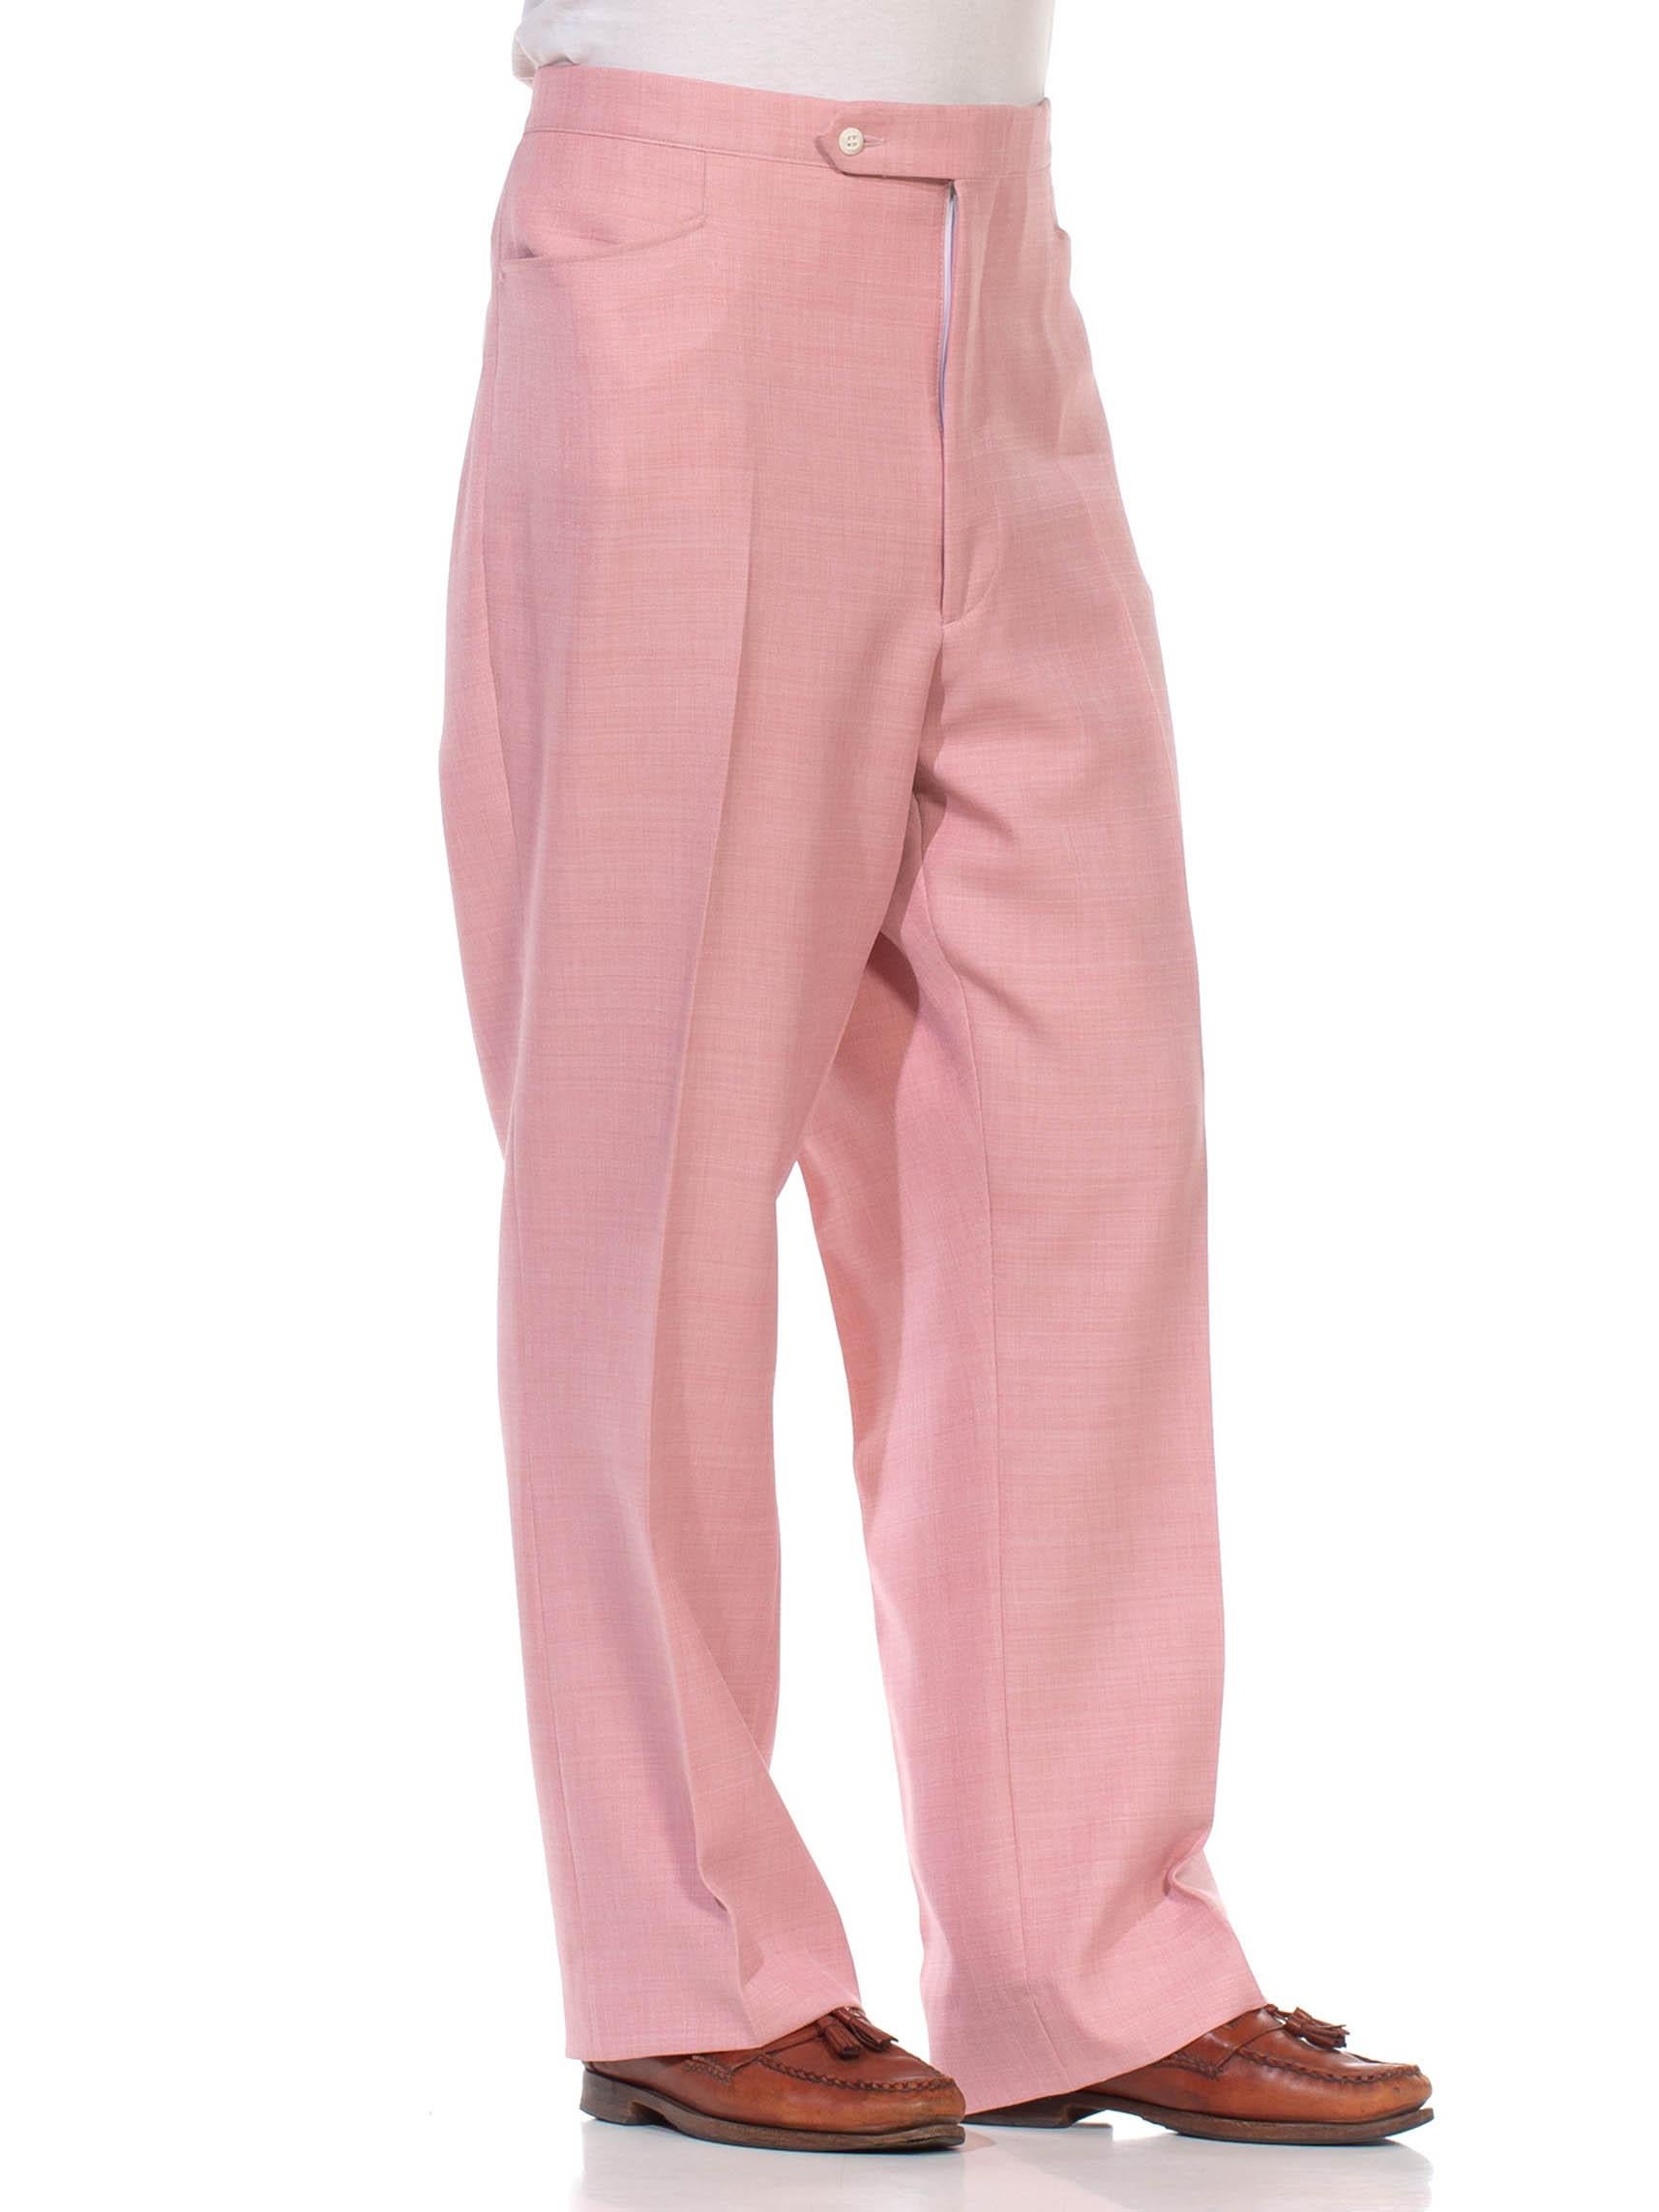 pink polyester pants